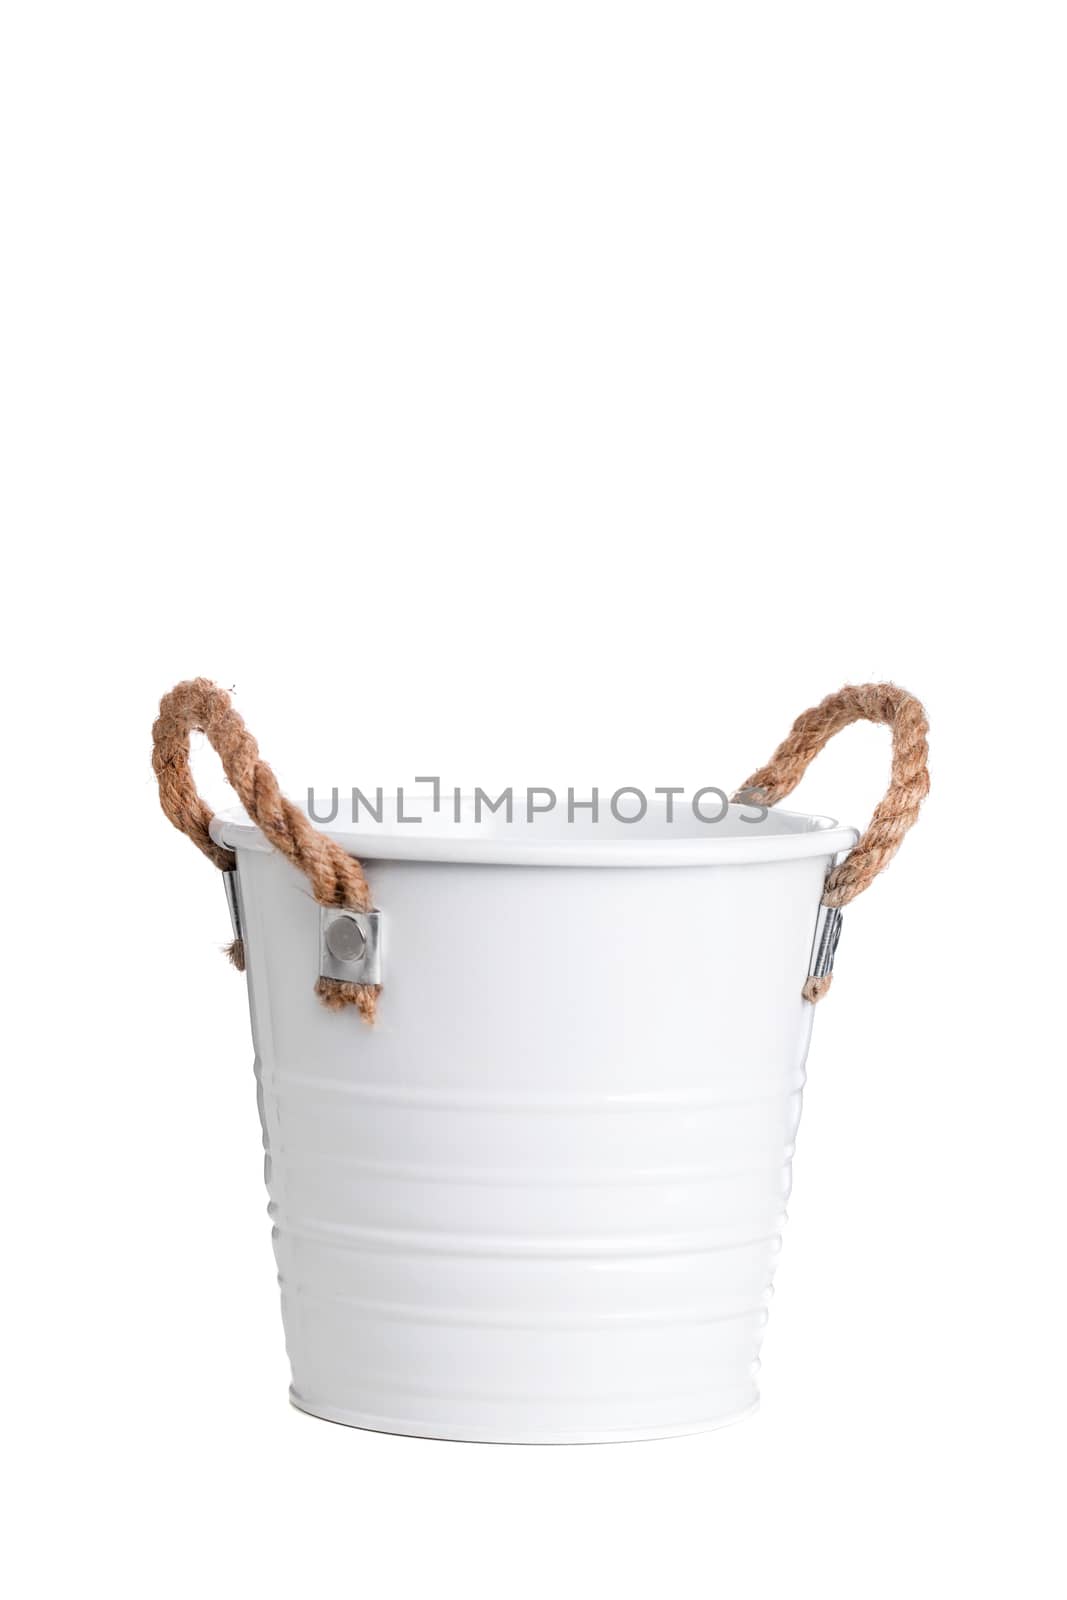 white bucket with rope handles by kokimk